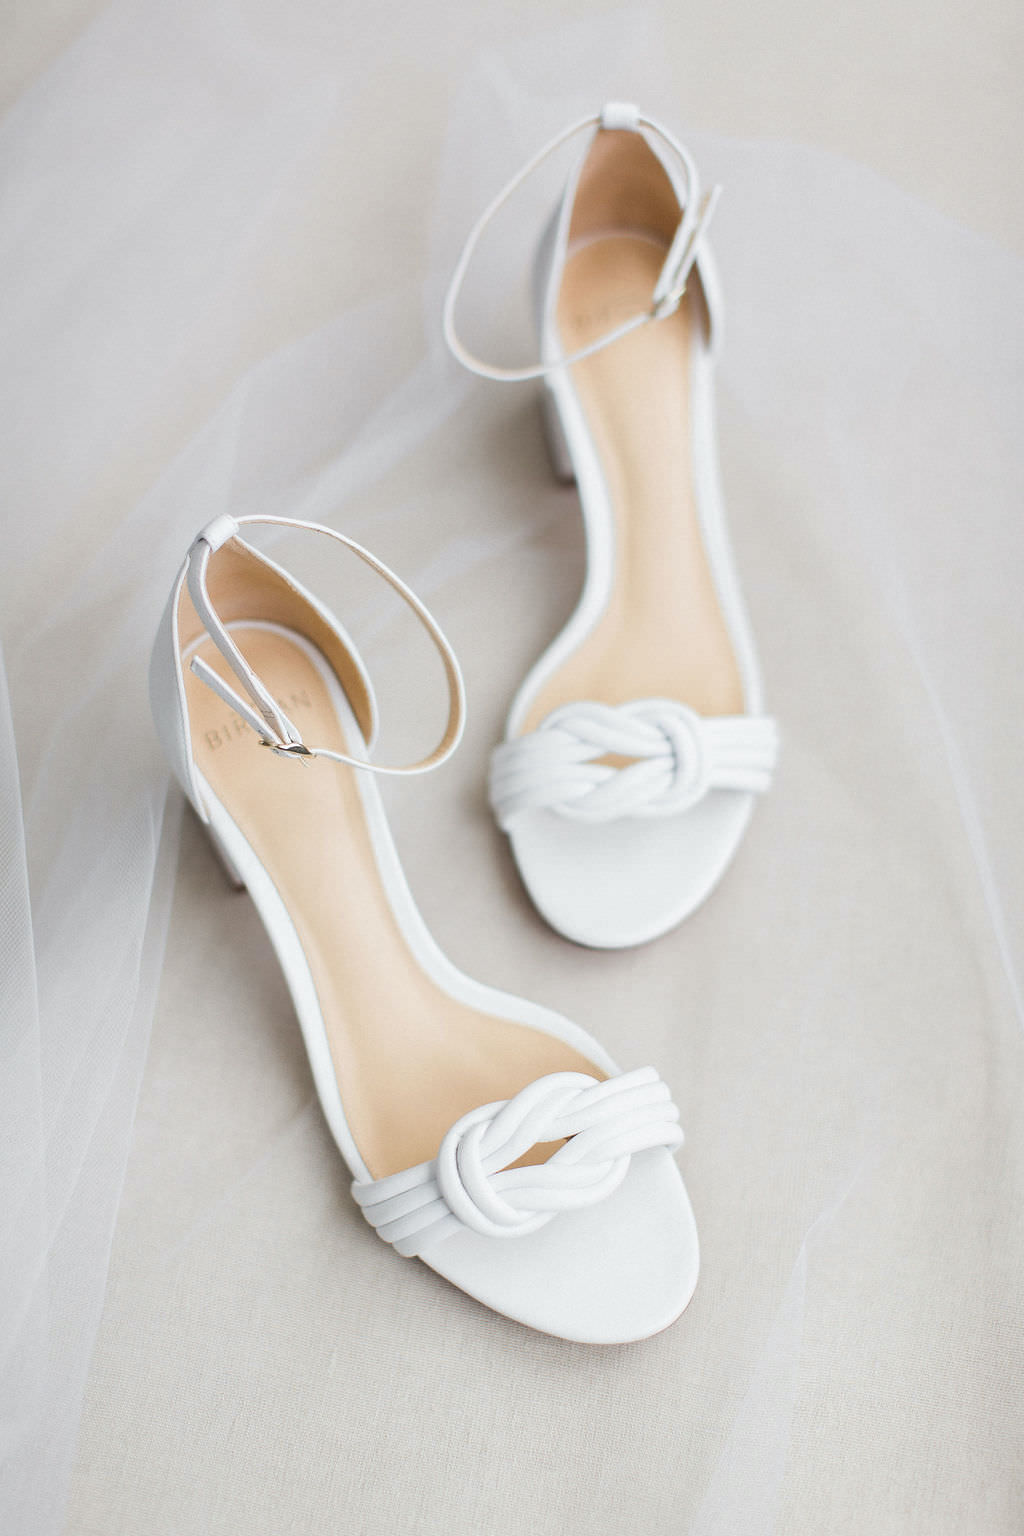 Classic White Wedding Shoes, Open Toe Bridal Shoes